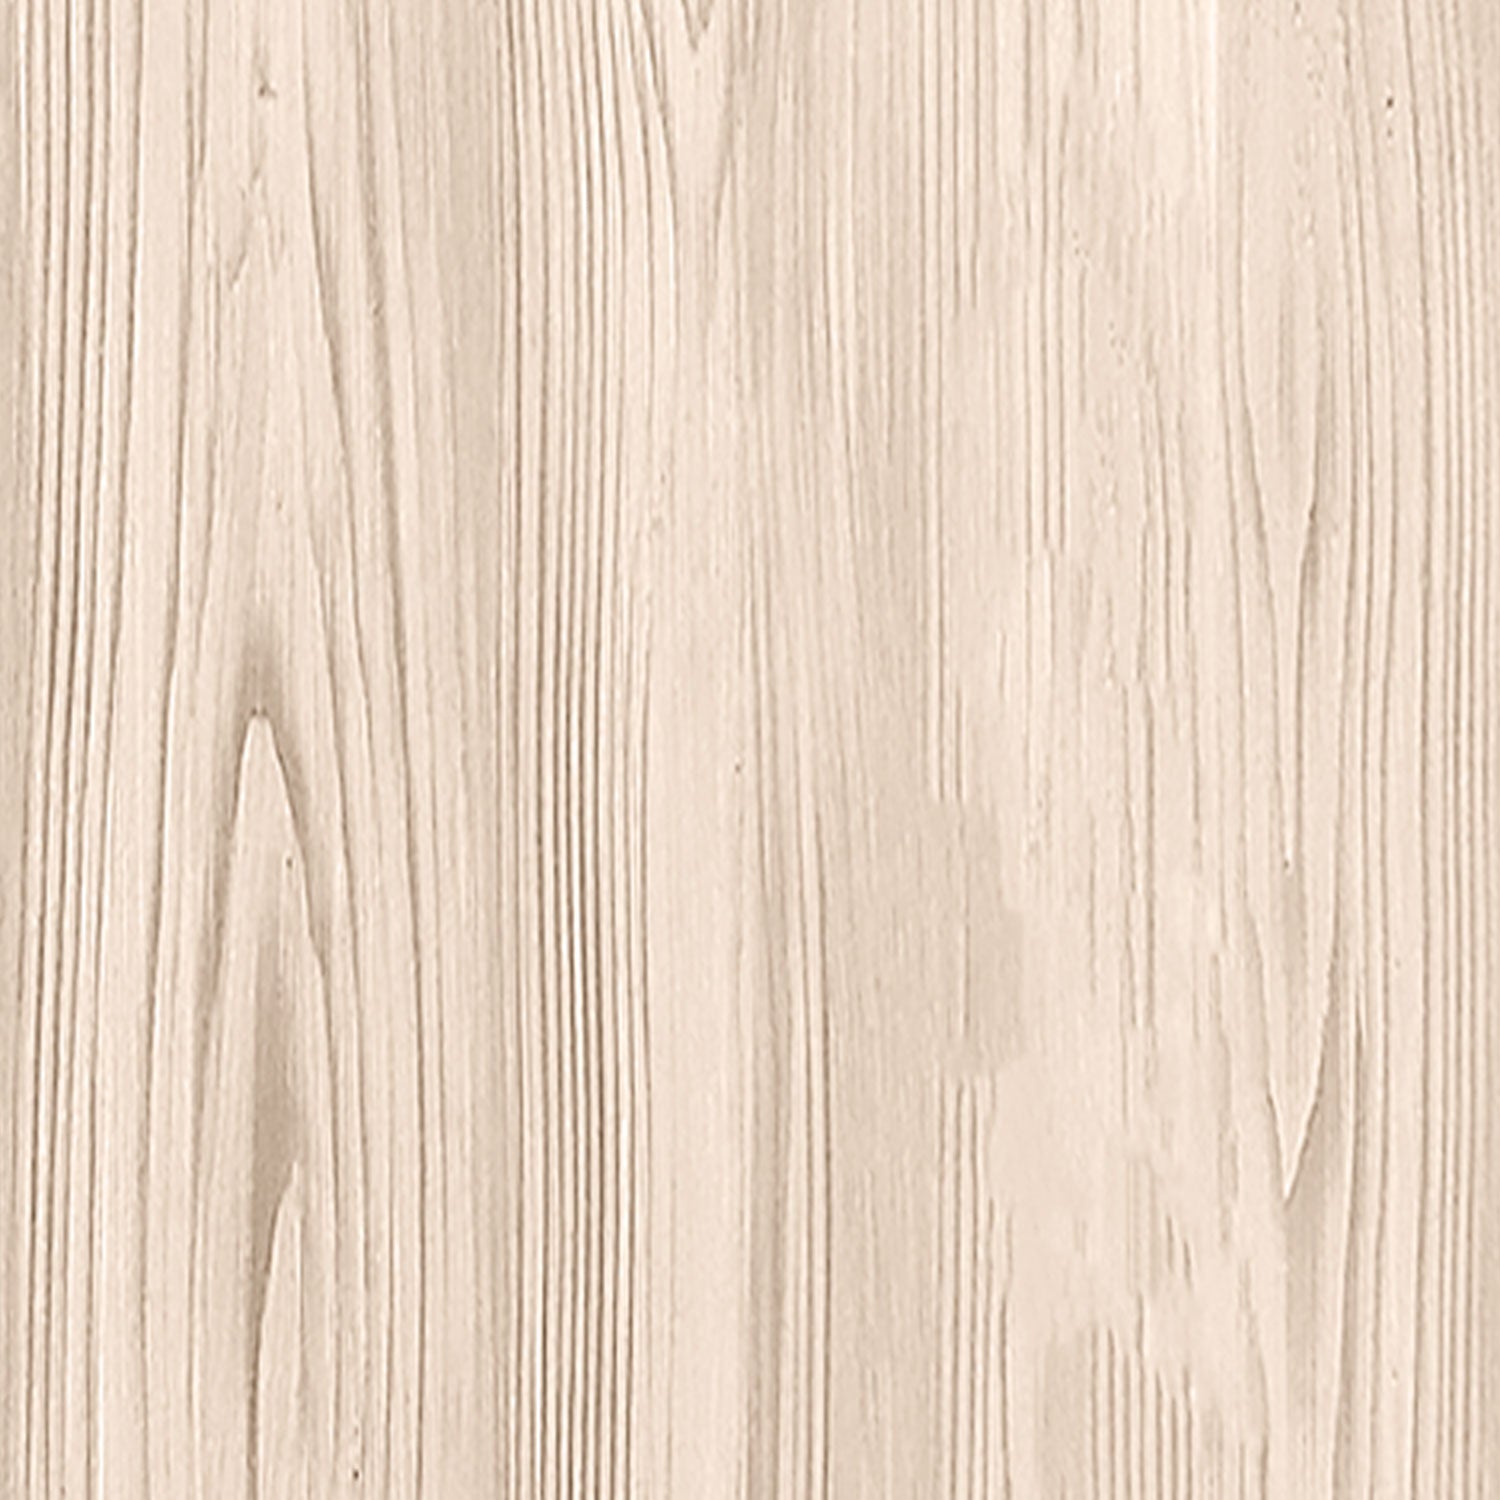 Multi-purpose Wood'n Kit (4x Lg) - White Oak - Exterior Top Coat